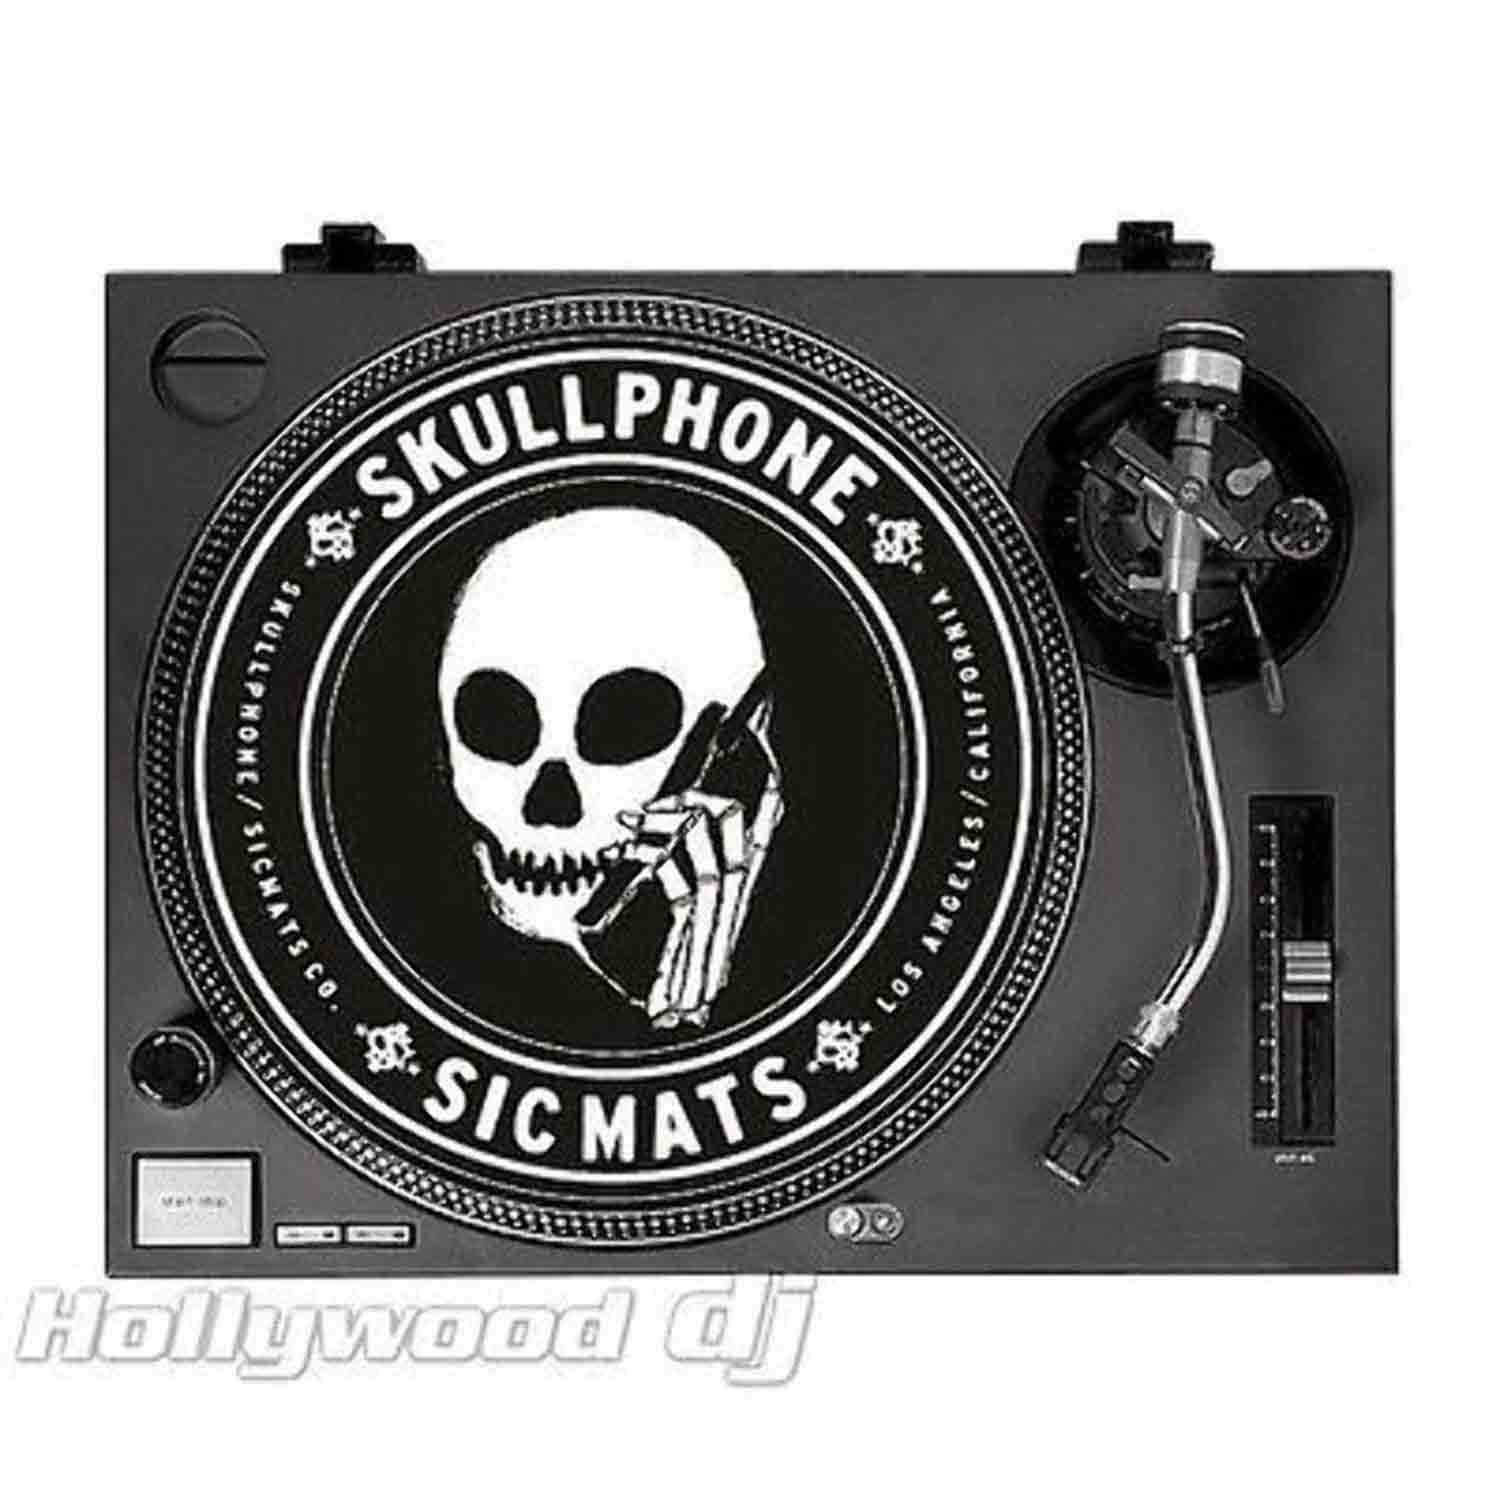 Sicmats Skullphone Turntable Slipmats - Pair - Hollywood DJ